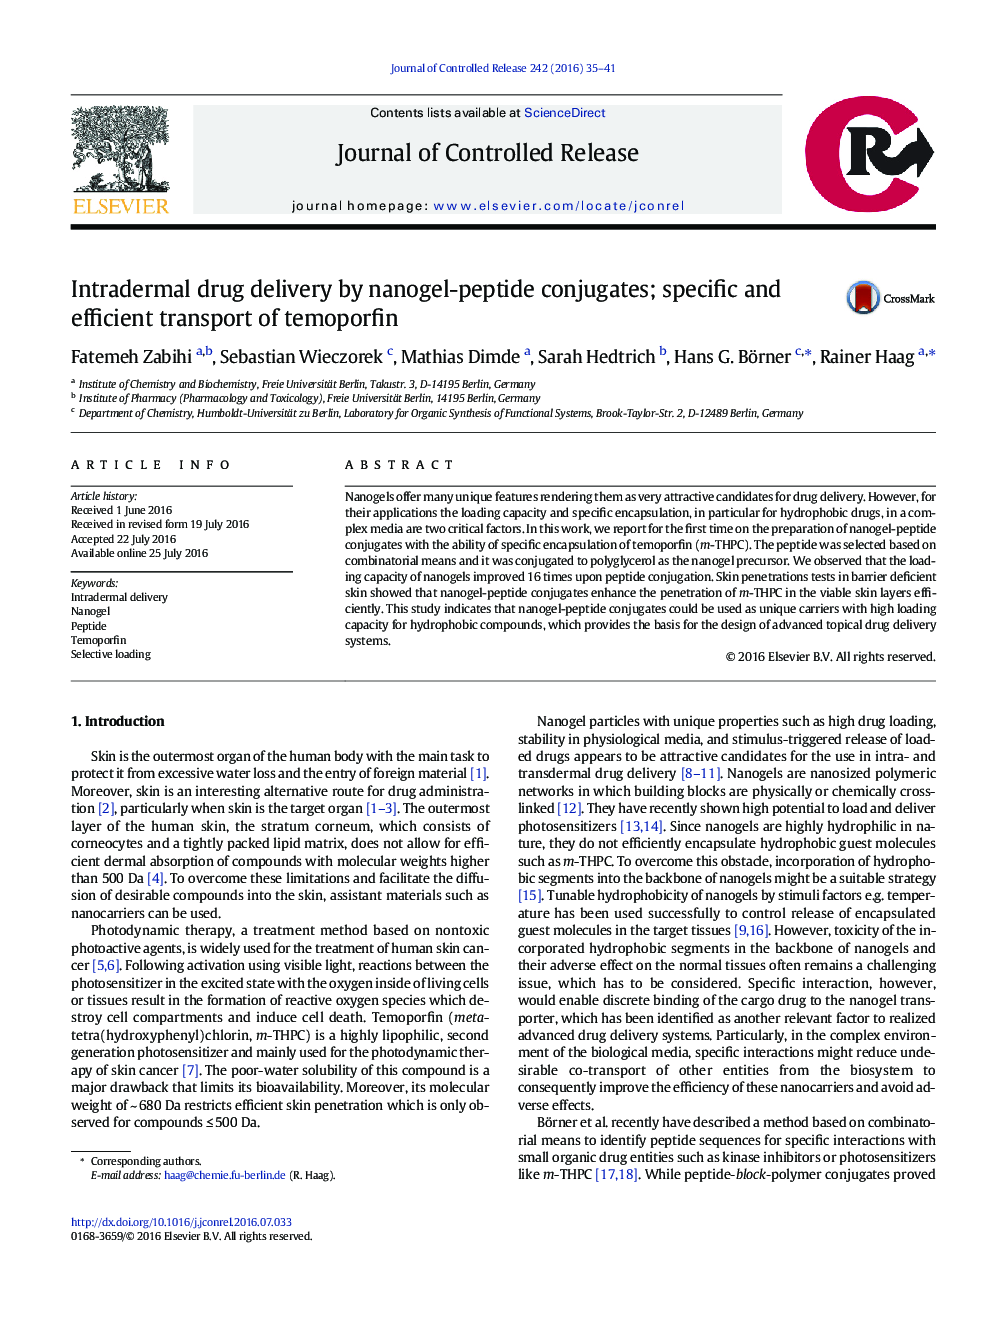 Intradermal drug delivery by nanogel-peptide conjugates; specific and efficient transport of temoporfin